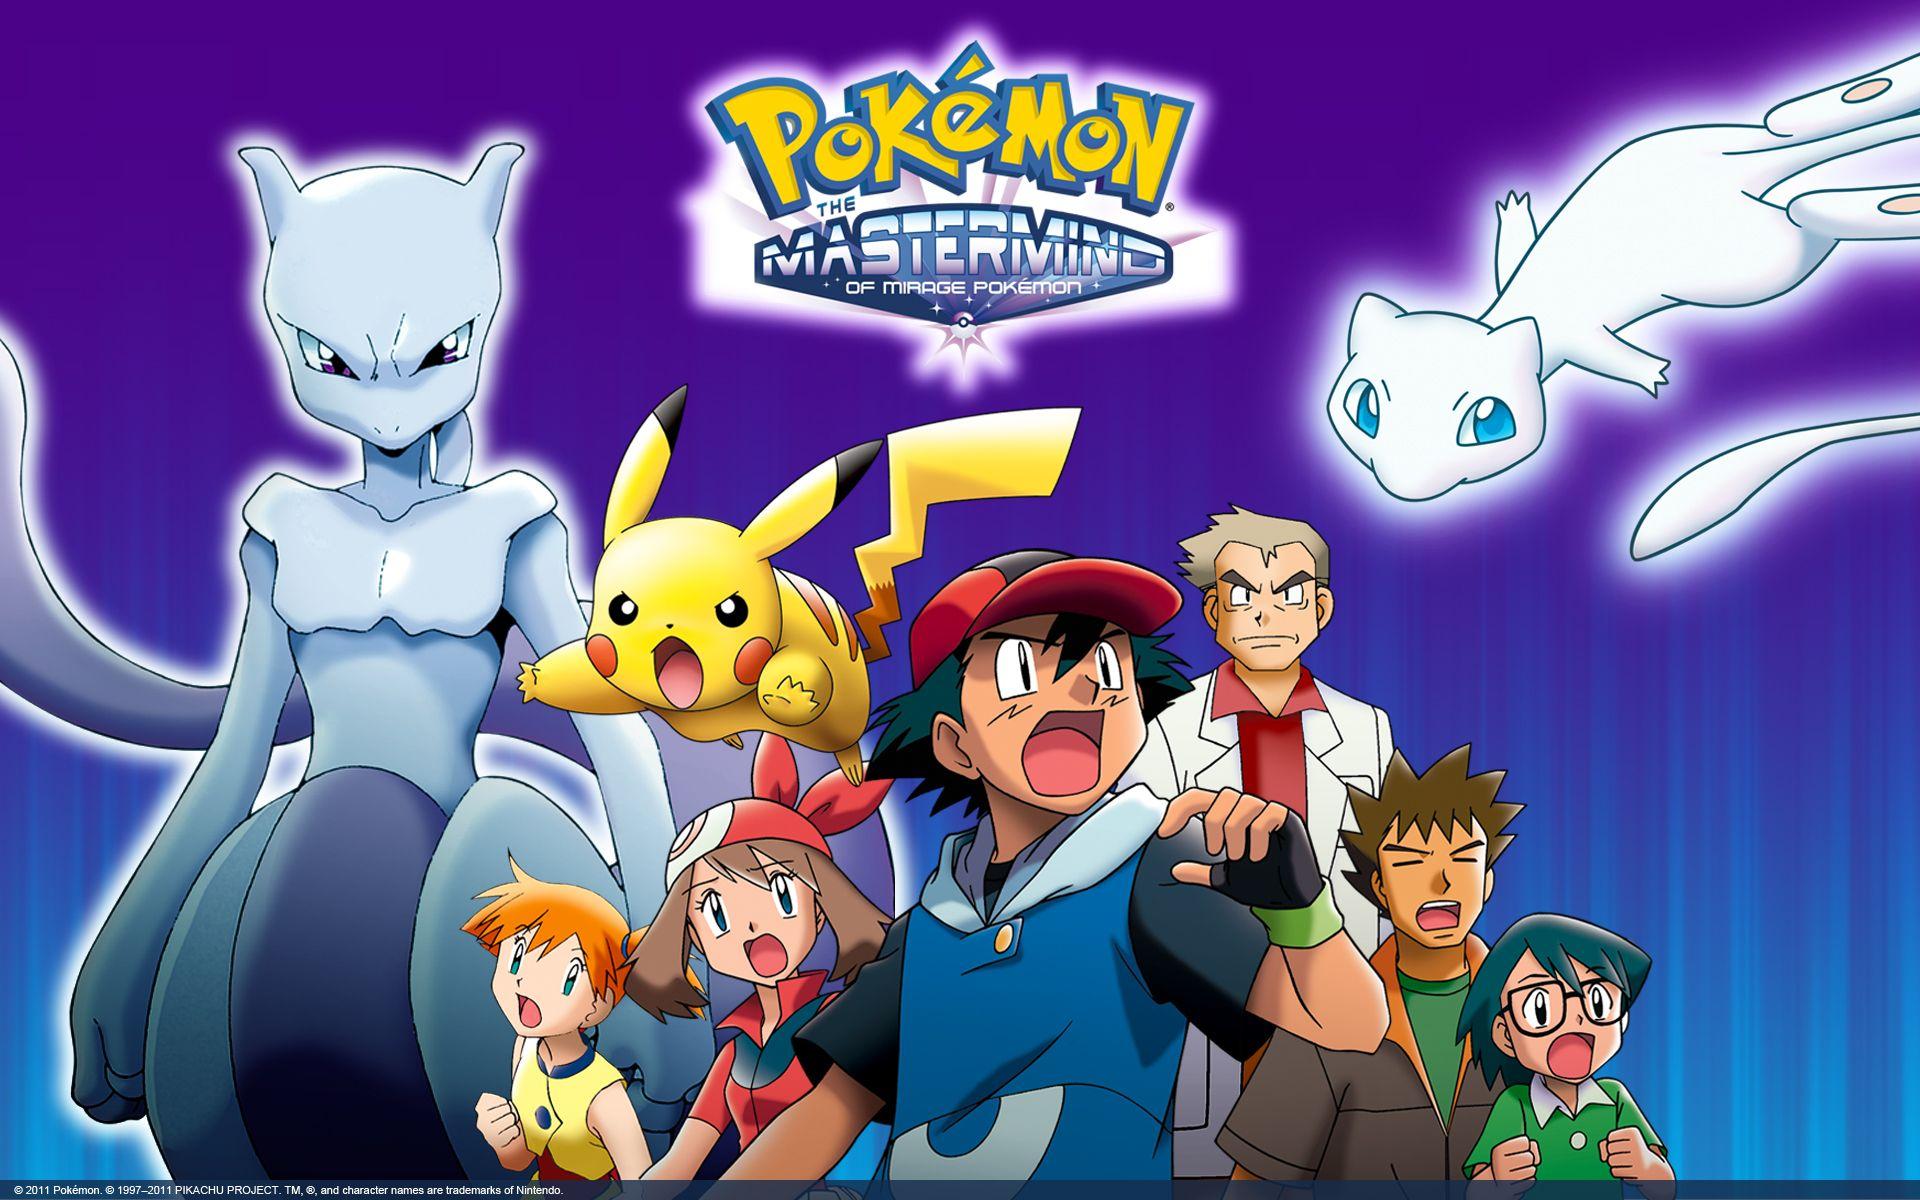 Pokémon: The Mastermind of Mirage Pokémonémon (Anime) Anime Image Board